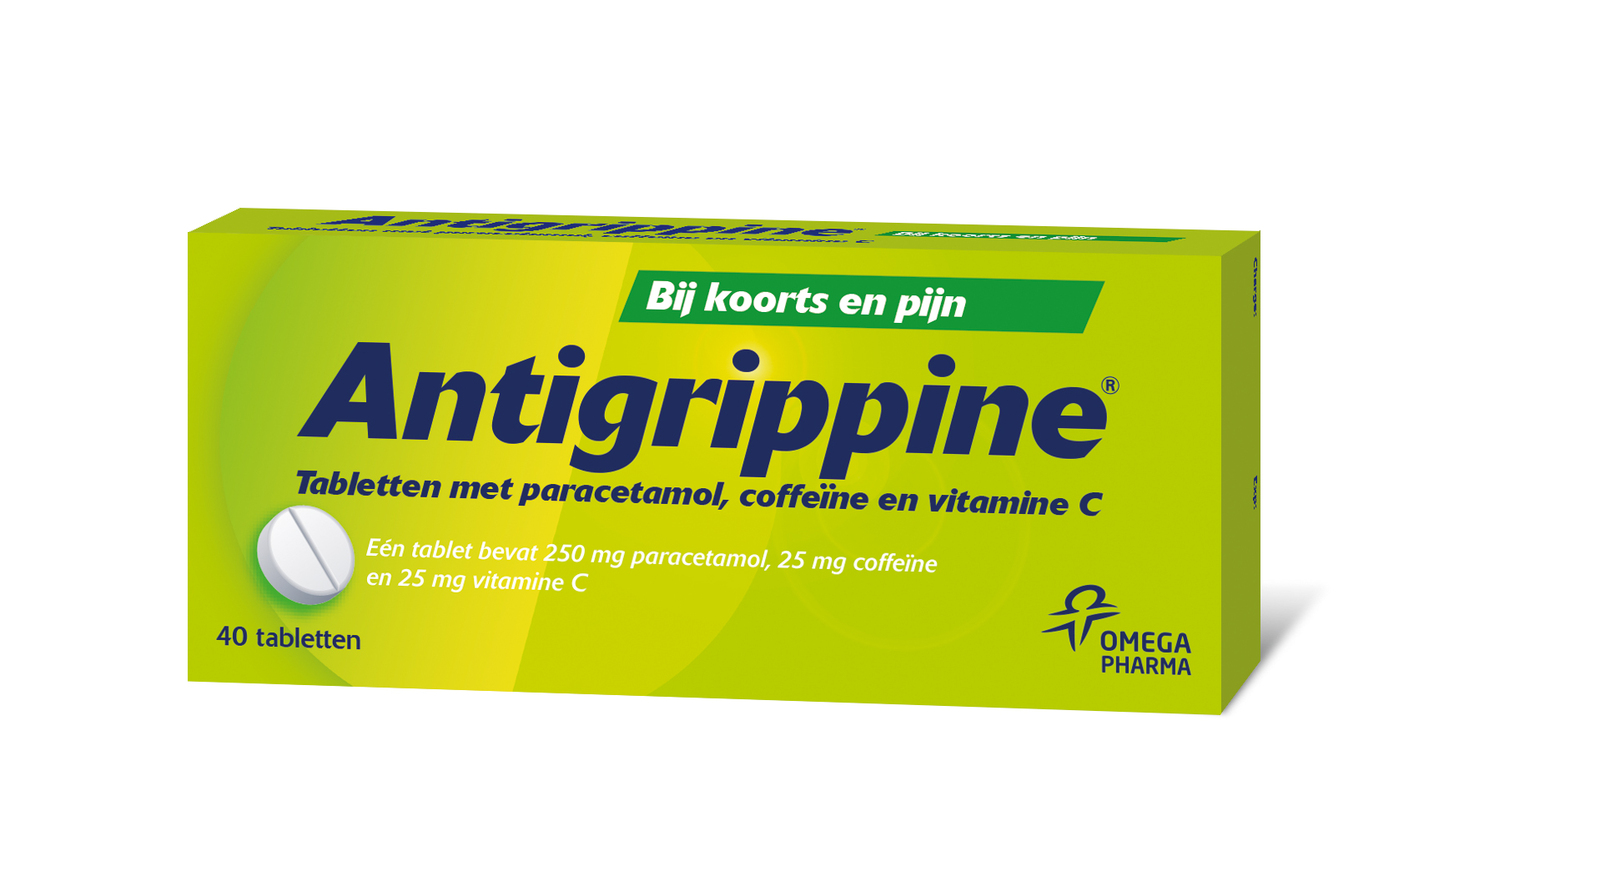 Antigrippine Tabletten kopen